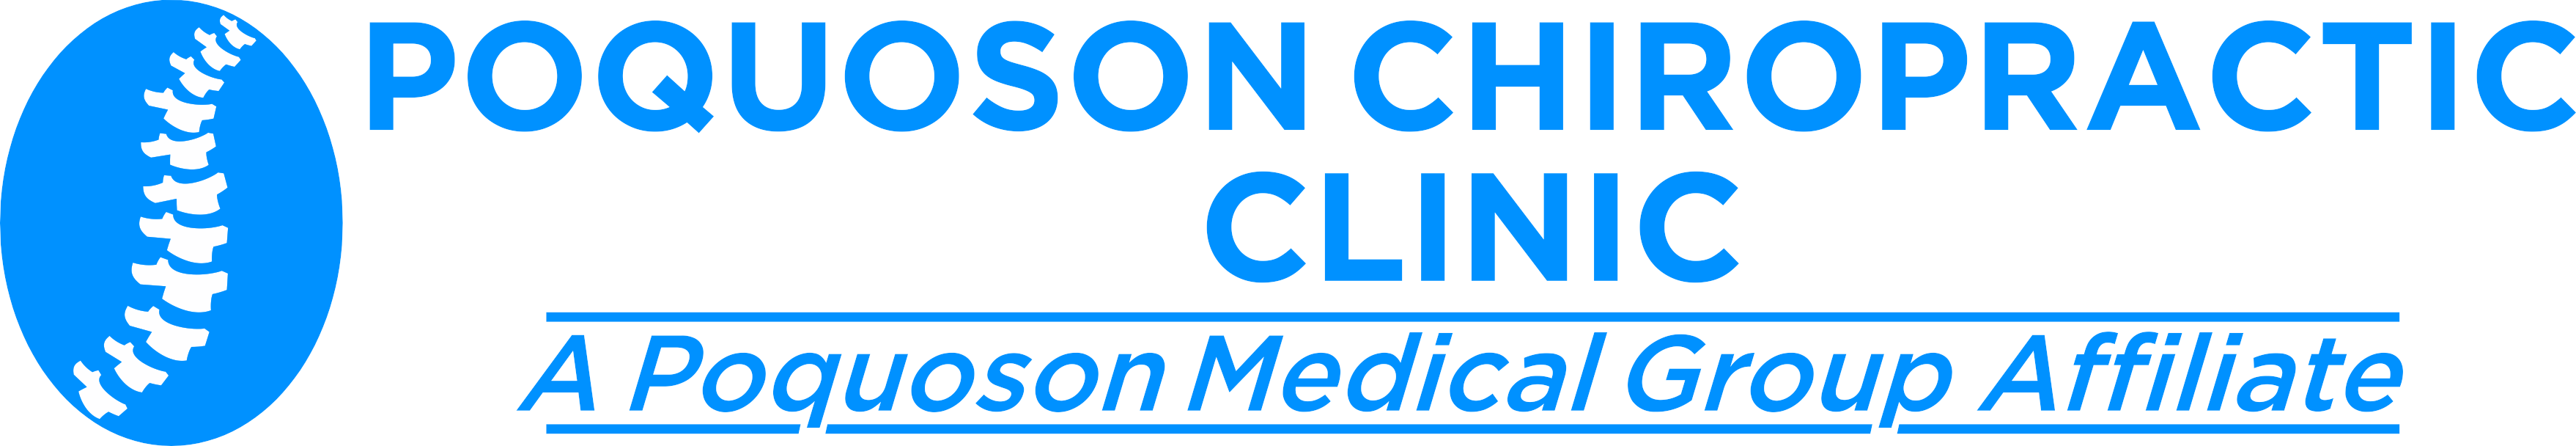 Poquoson Chiropractic Clinic